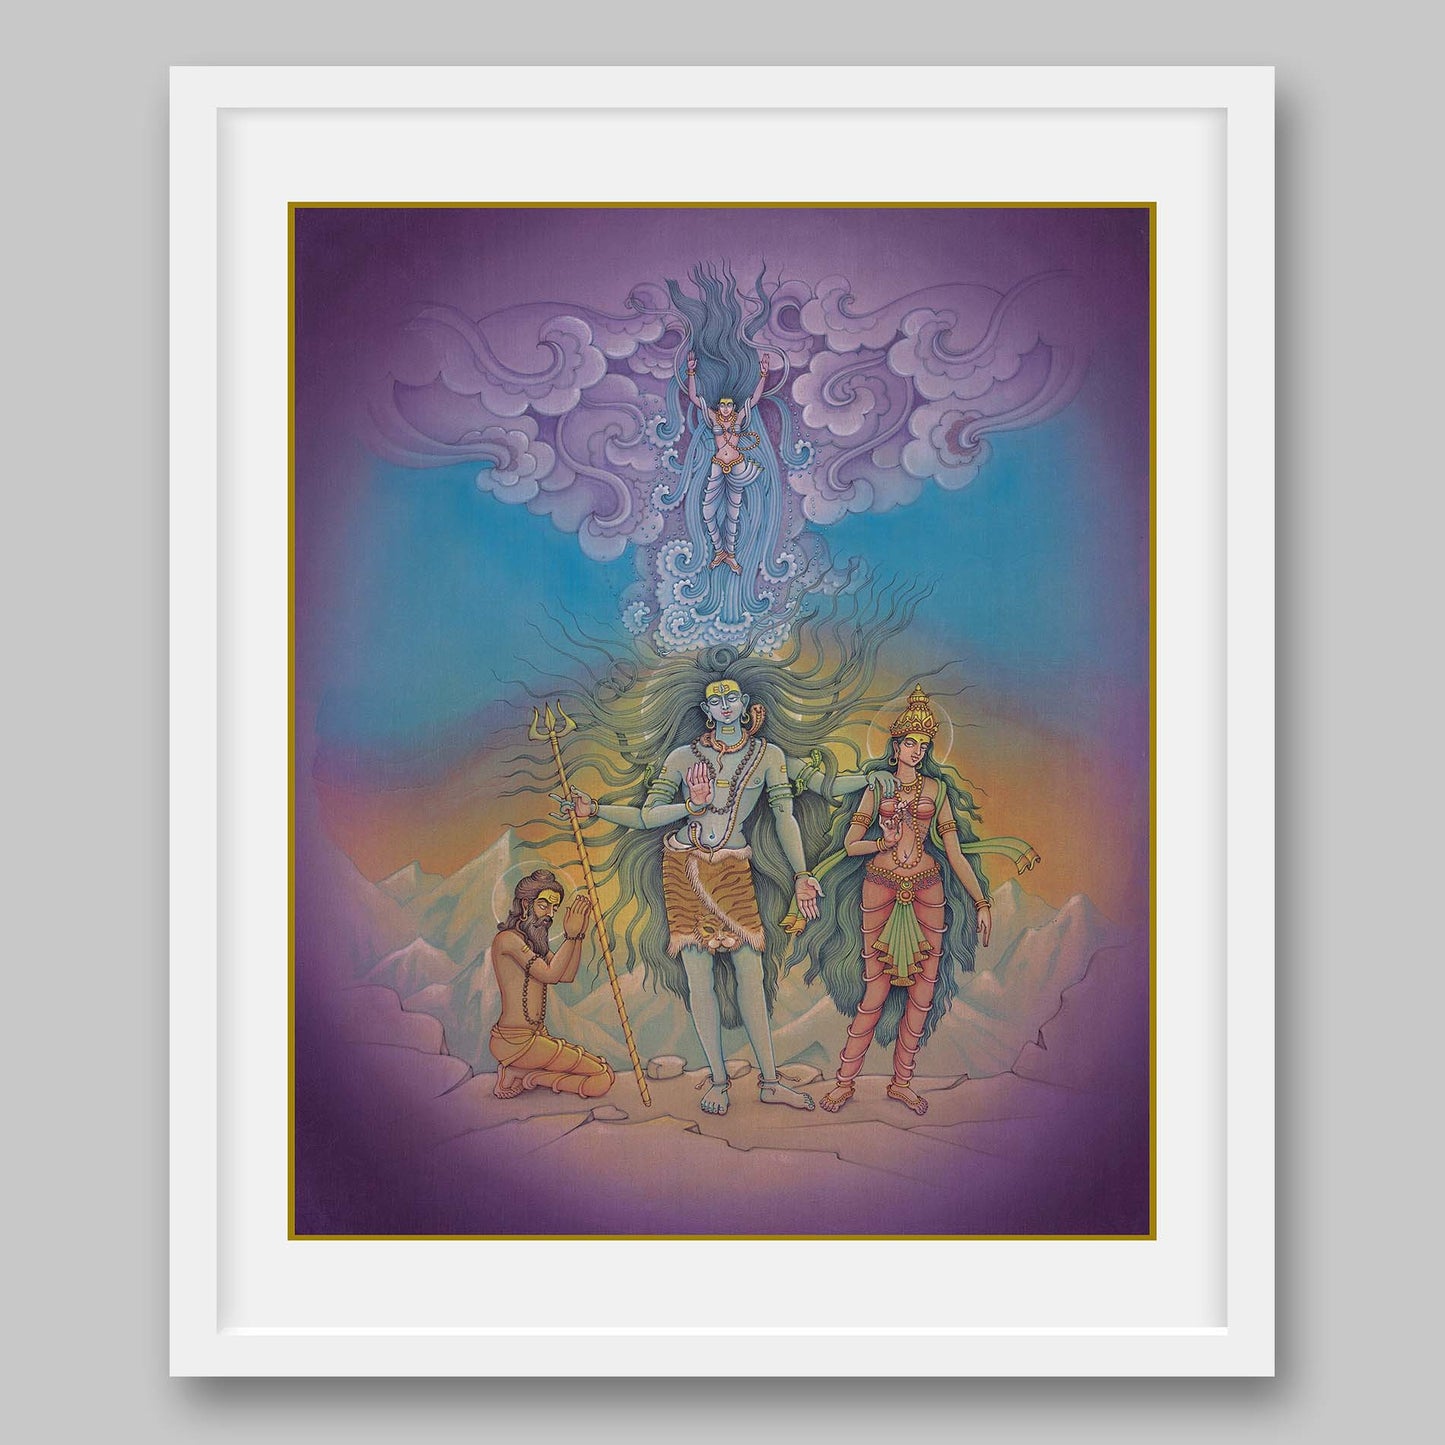 Bhagirath praying to Hindu God, Shiva – High Quality Print of Artwork by Pieter Weltevrede